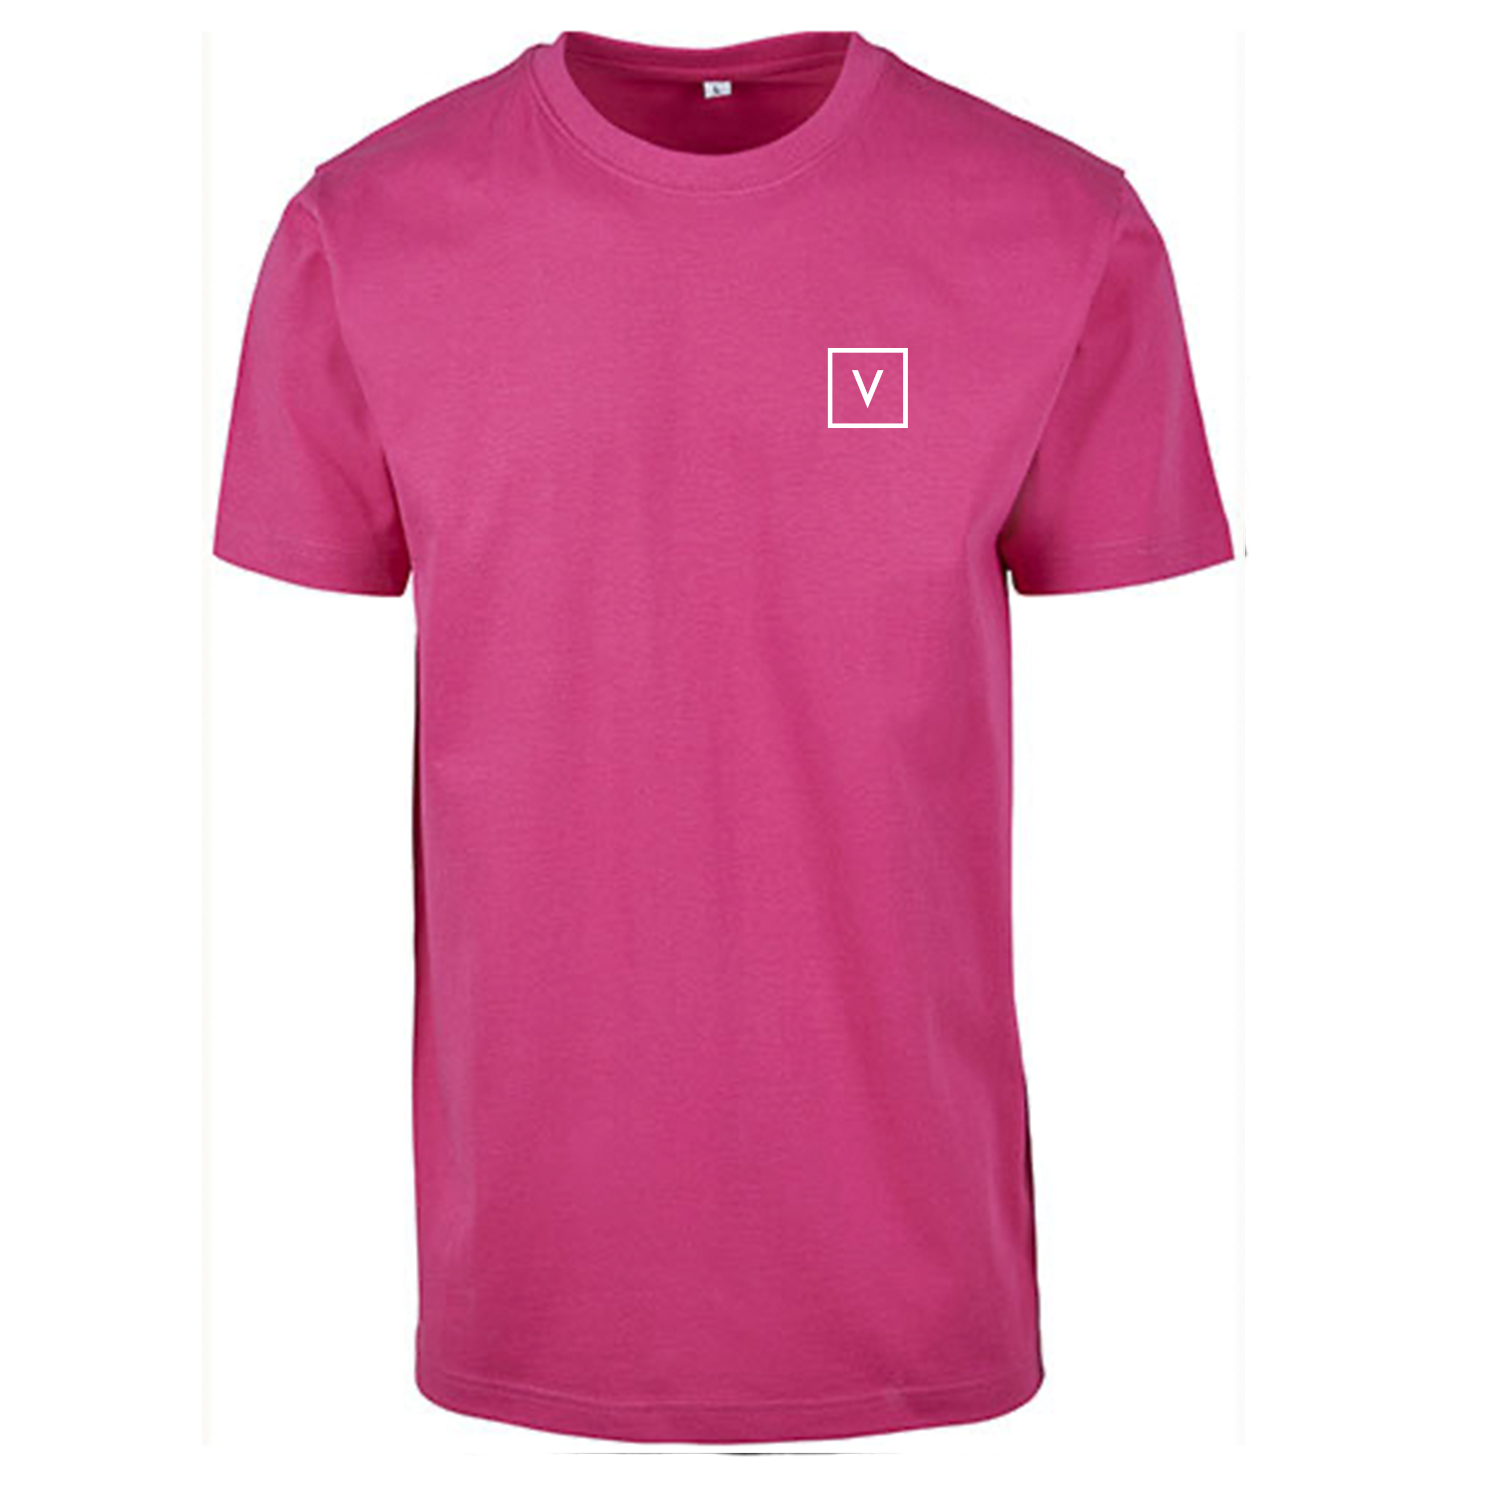 VENUS T-Shirt "V" - Pink/Weiß/Weiß